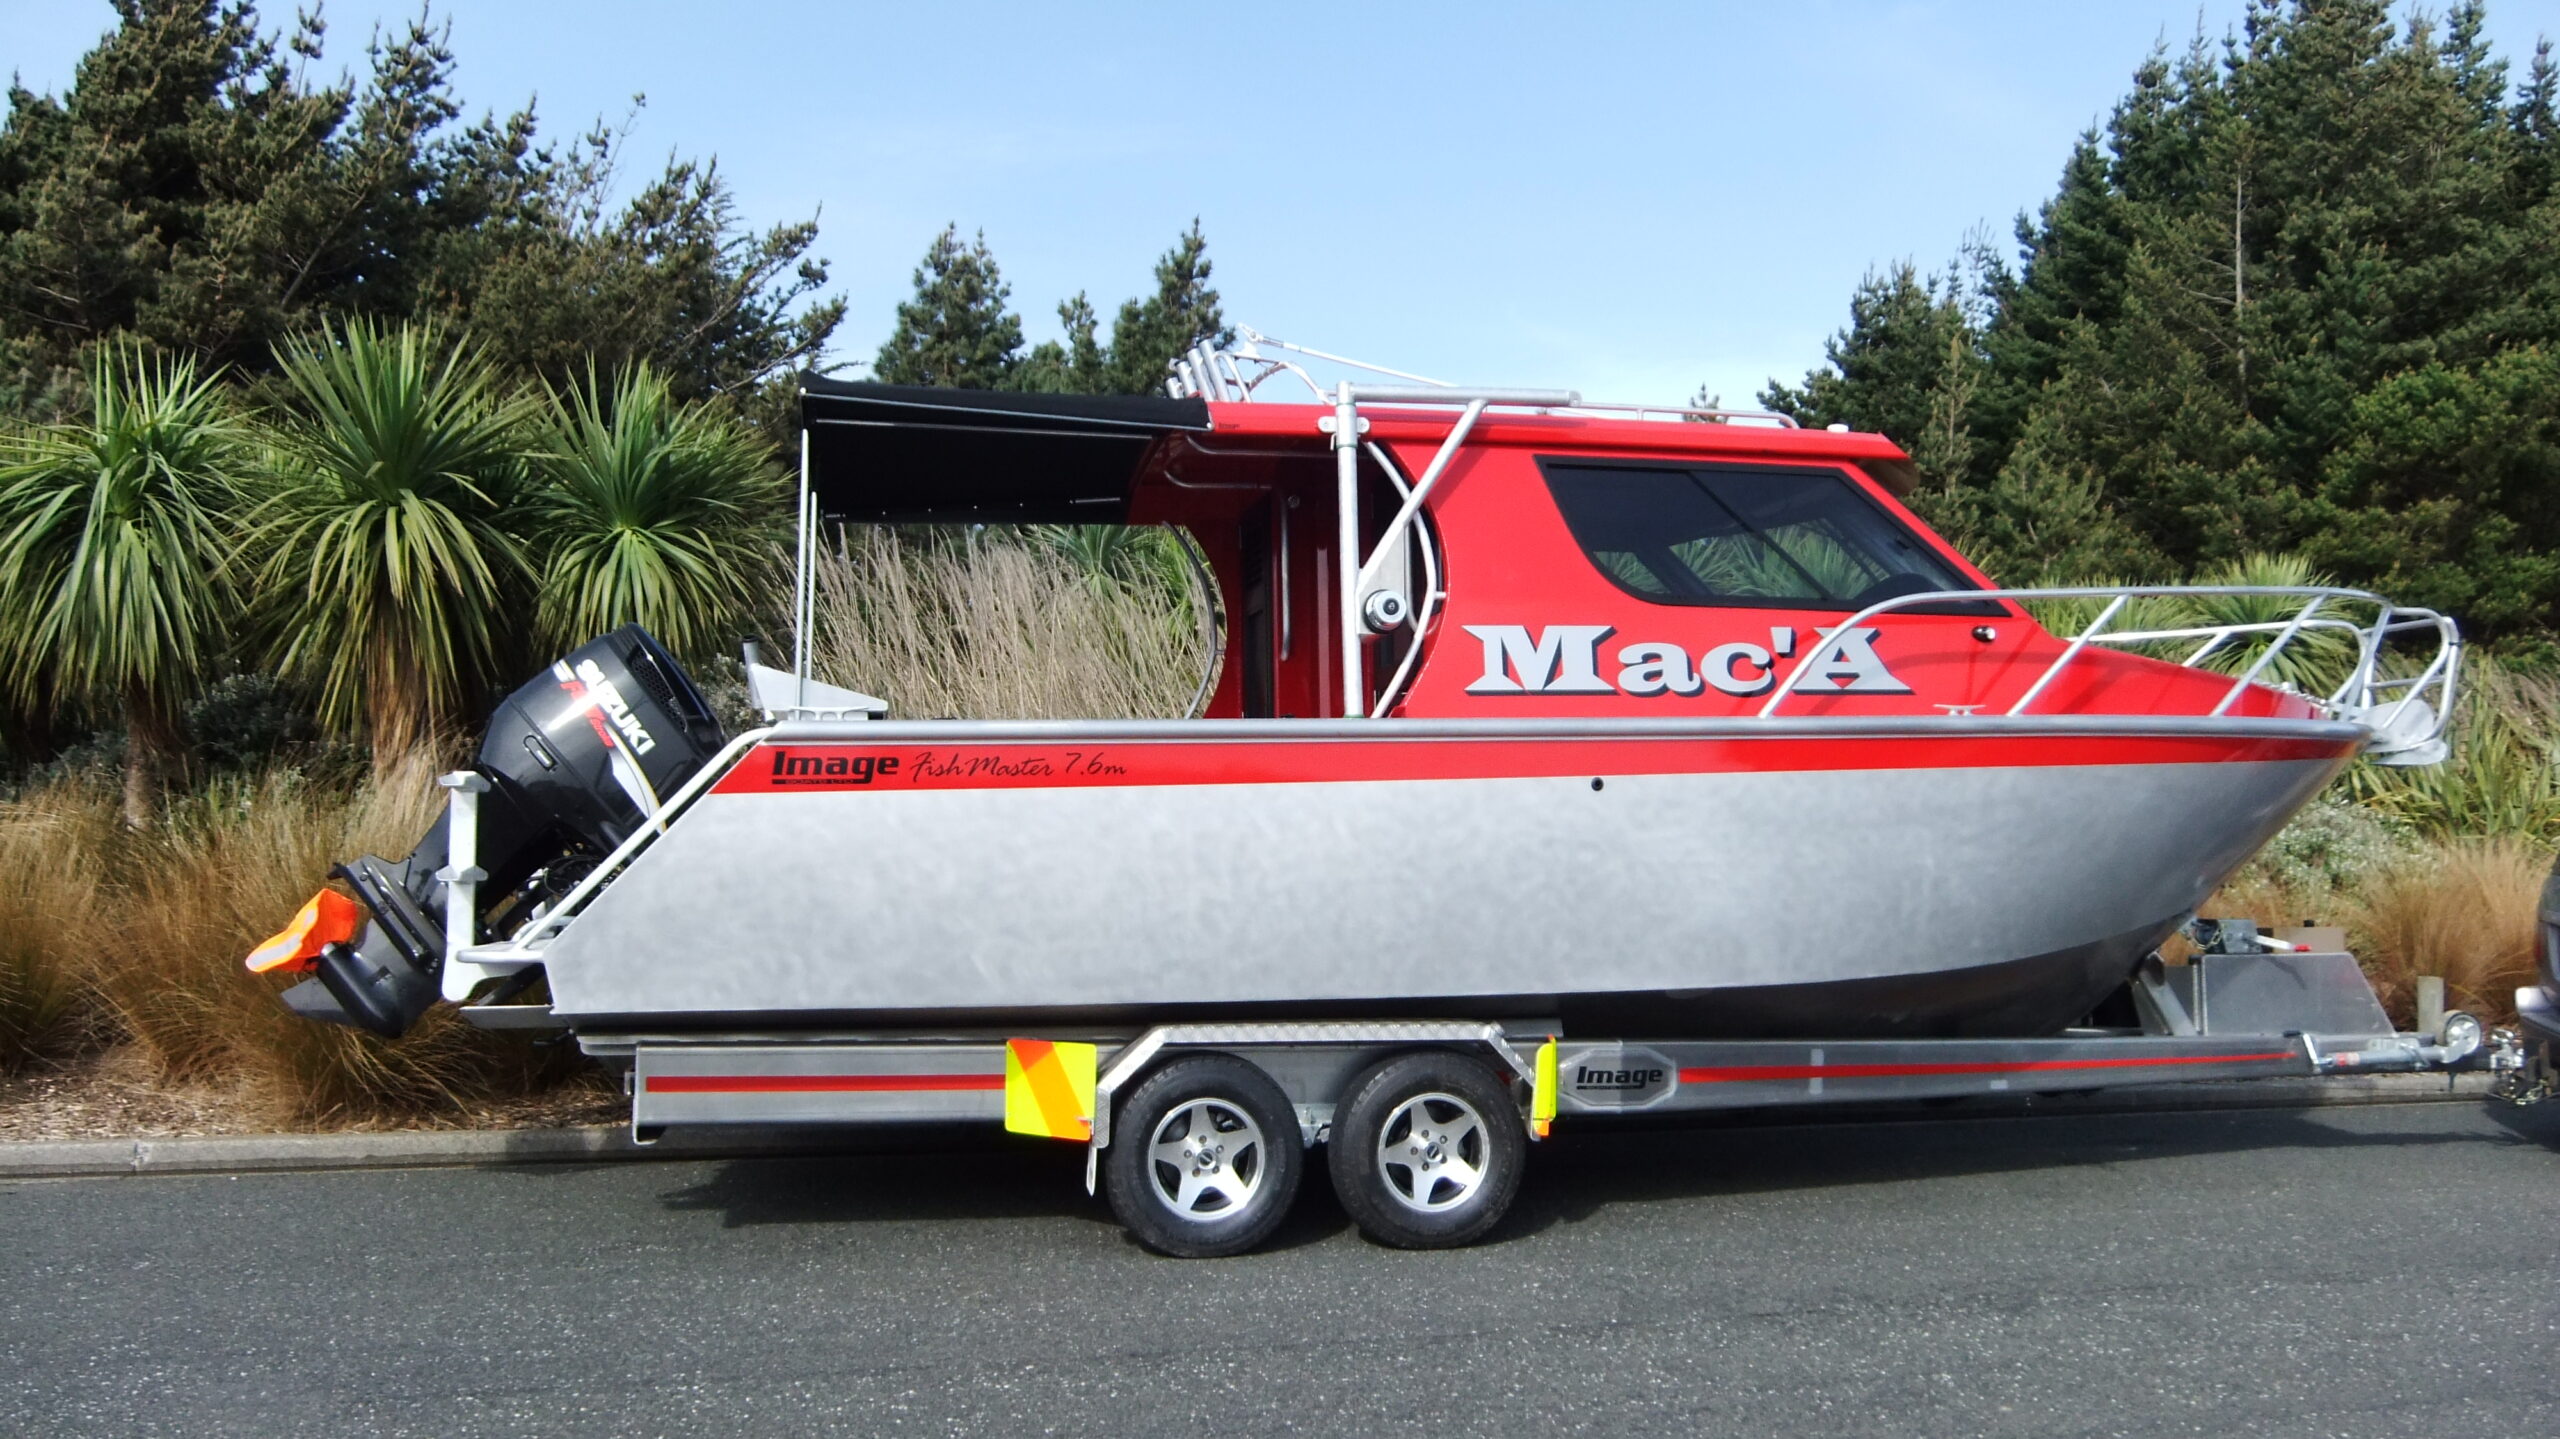 Image Boats New Zealand Mac'A 7.6m Fishmaster boat